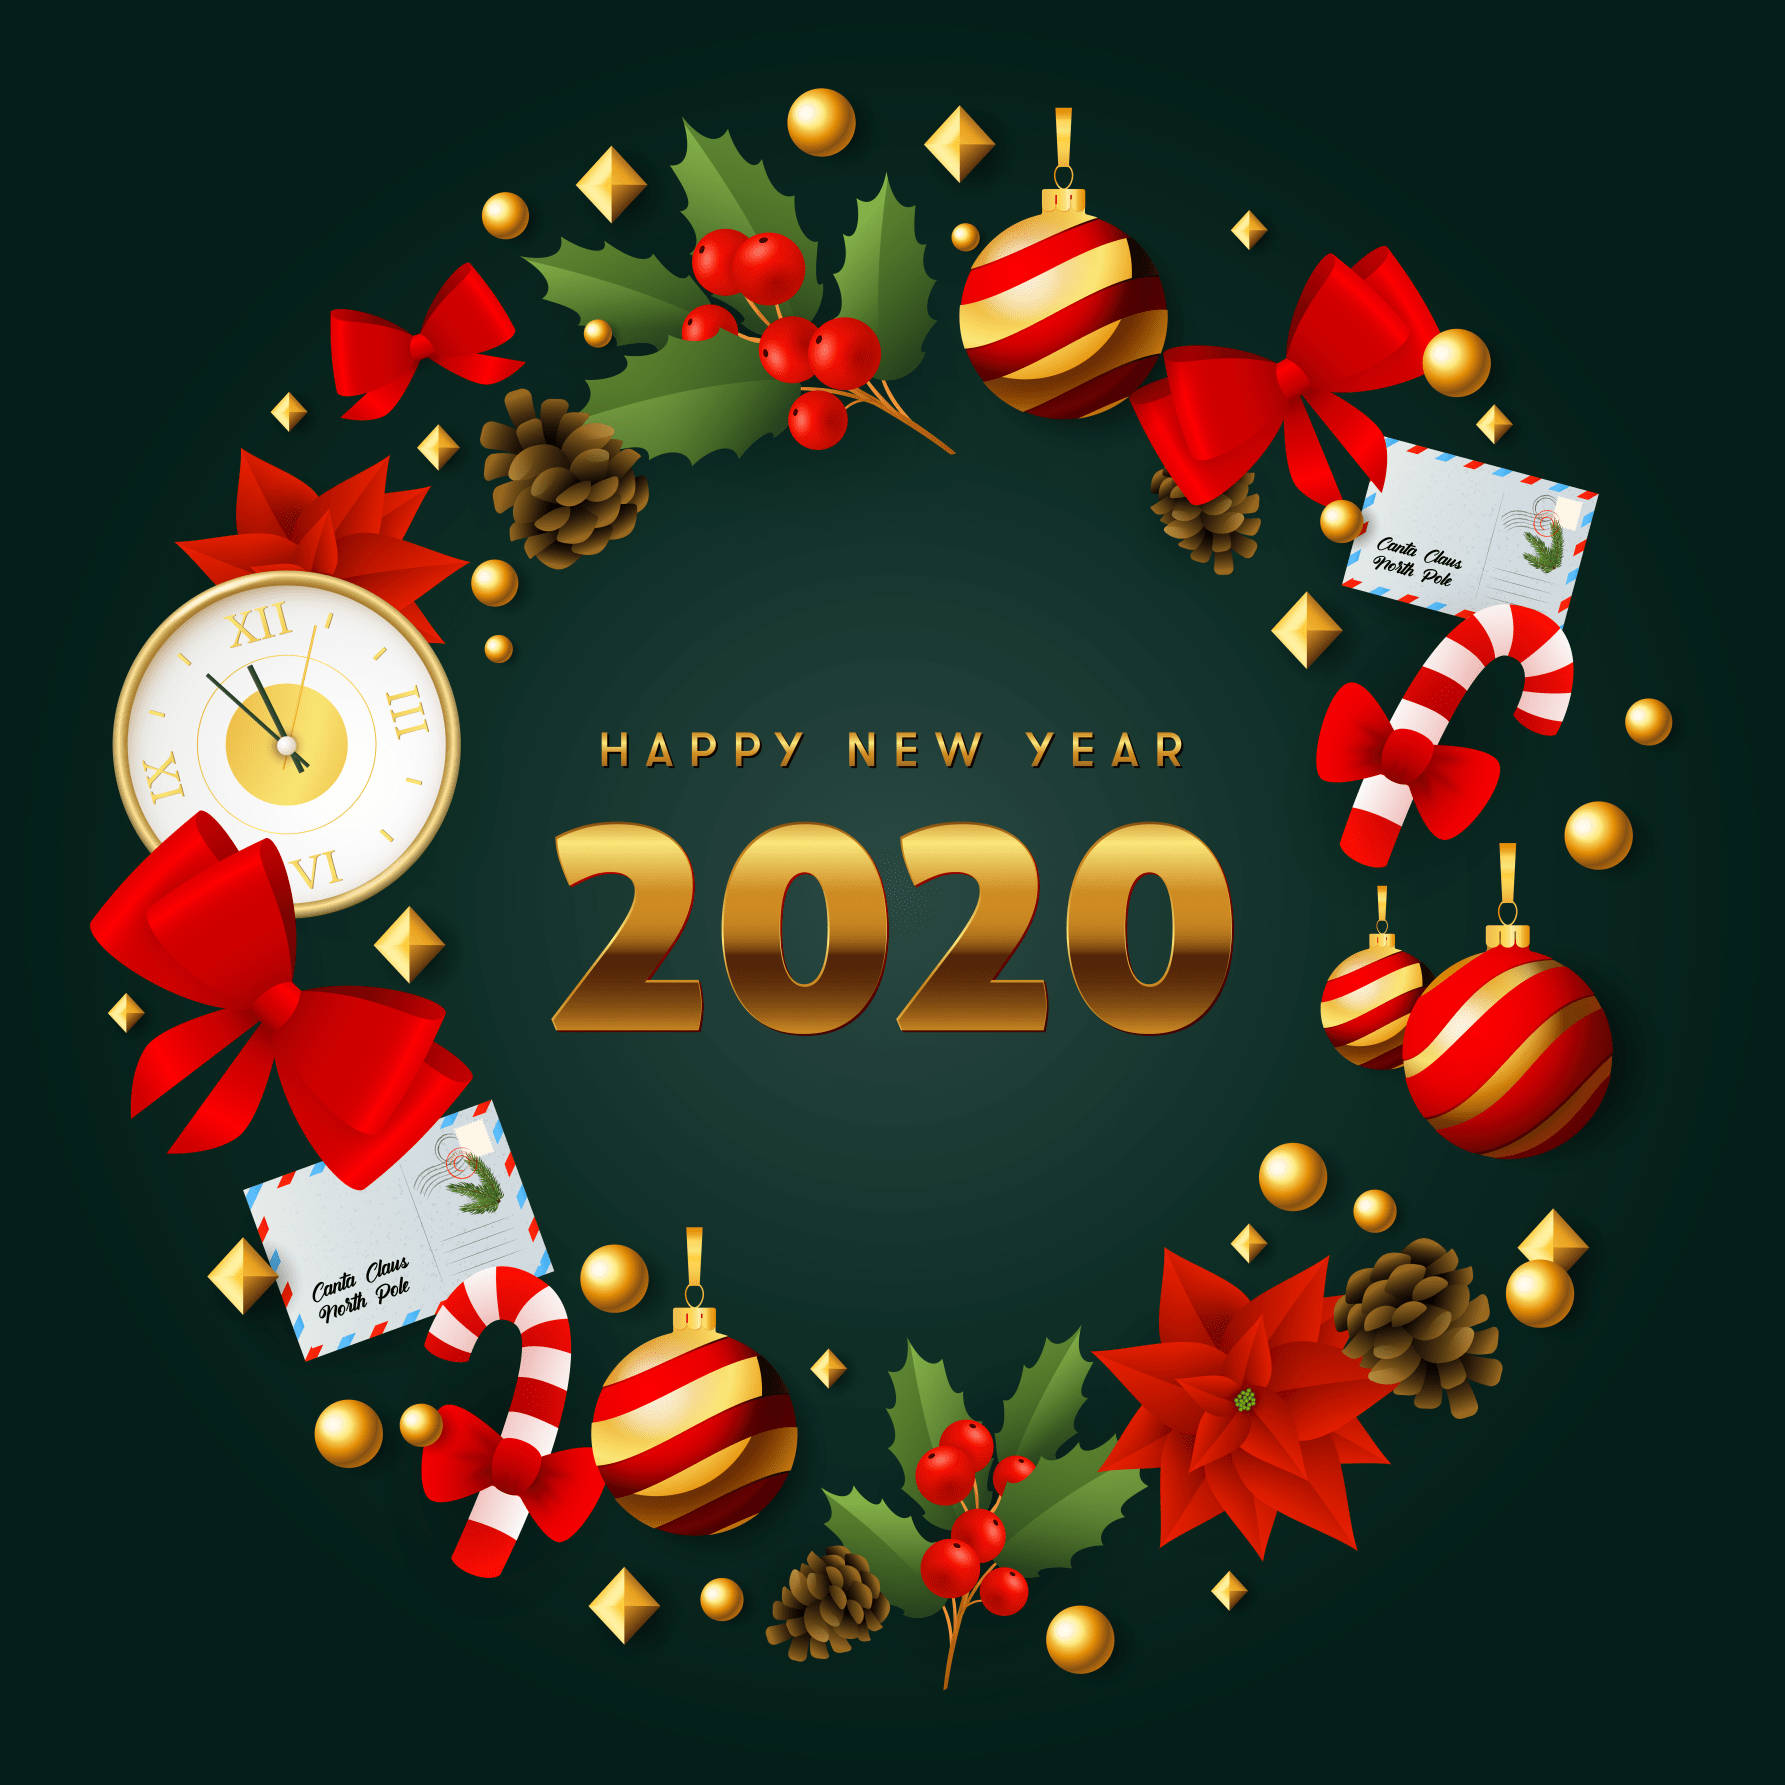 Byd velkommen til det friske nytår 2020 med et ønske om et Glædelig Nytår! Wallpaper